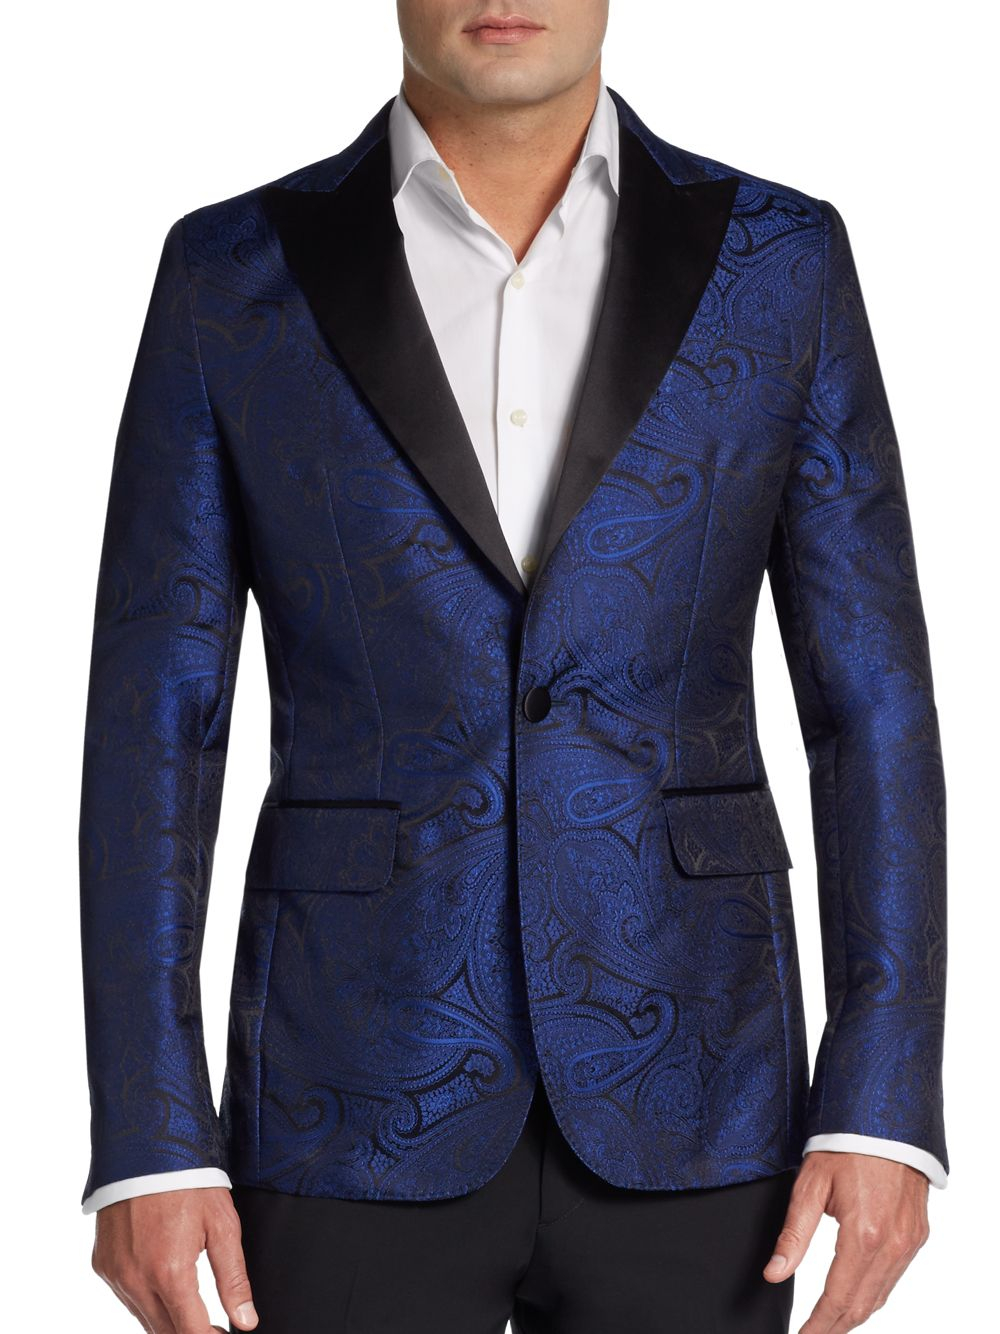 Lyst - Dsquared² Paisley Jacquard Dinner Jacket in Blue for Men